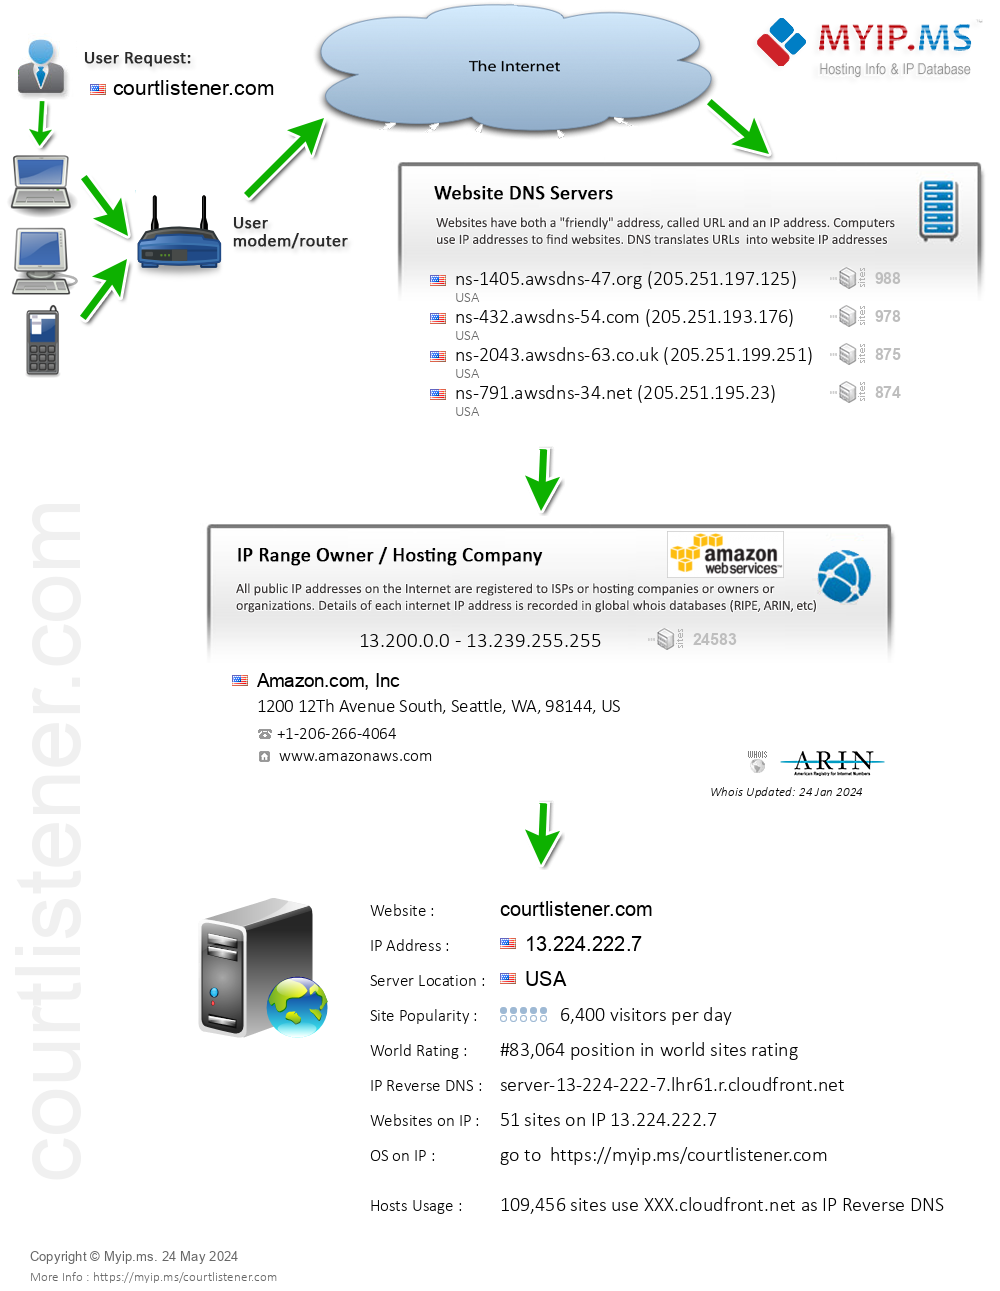 Courtlistener.com - Website Hosting Visual IP Diagram